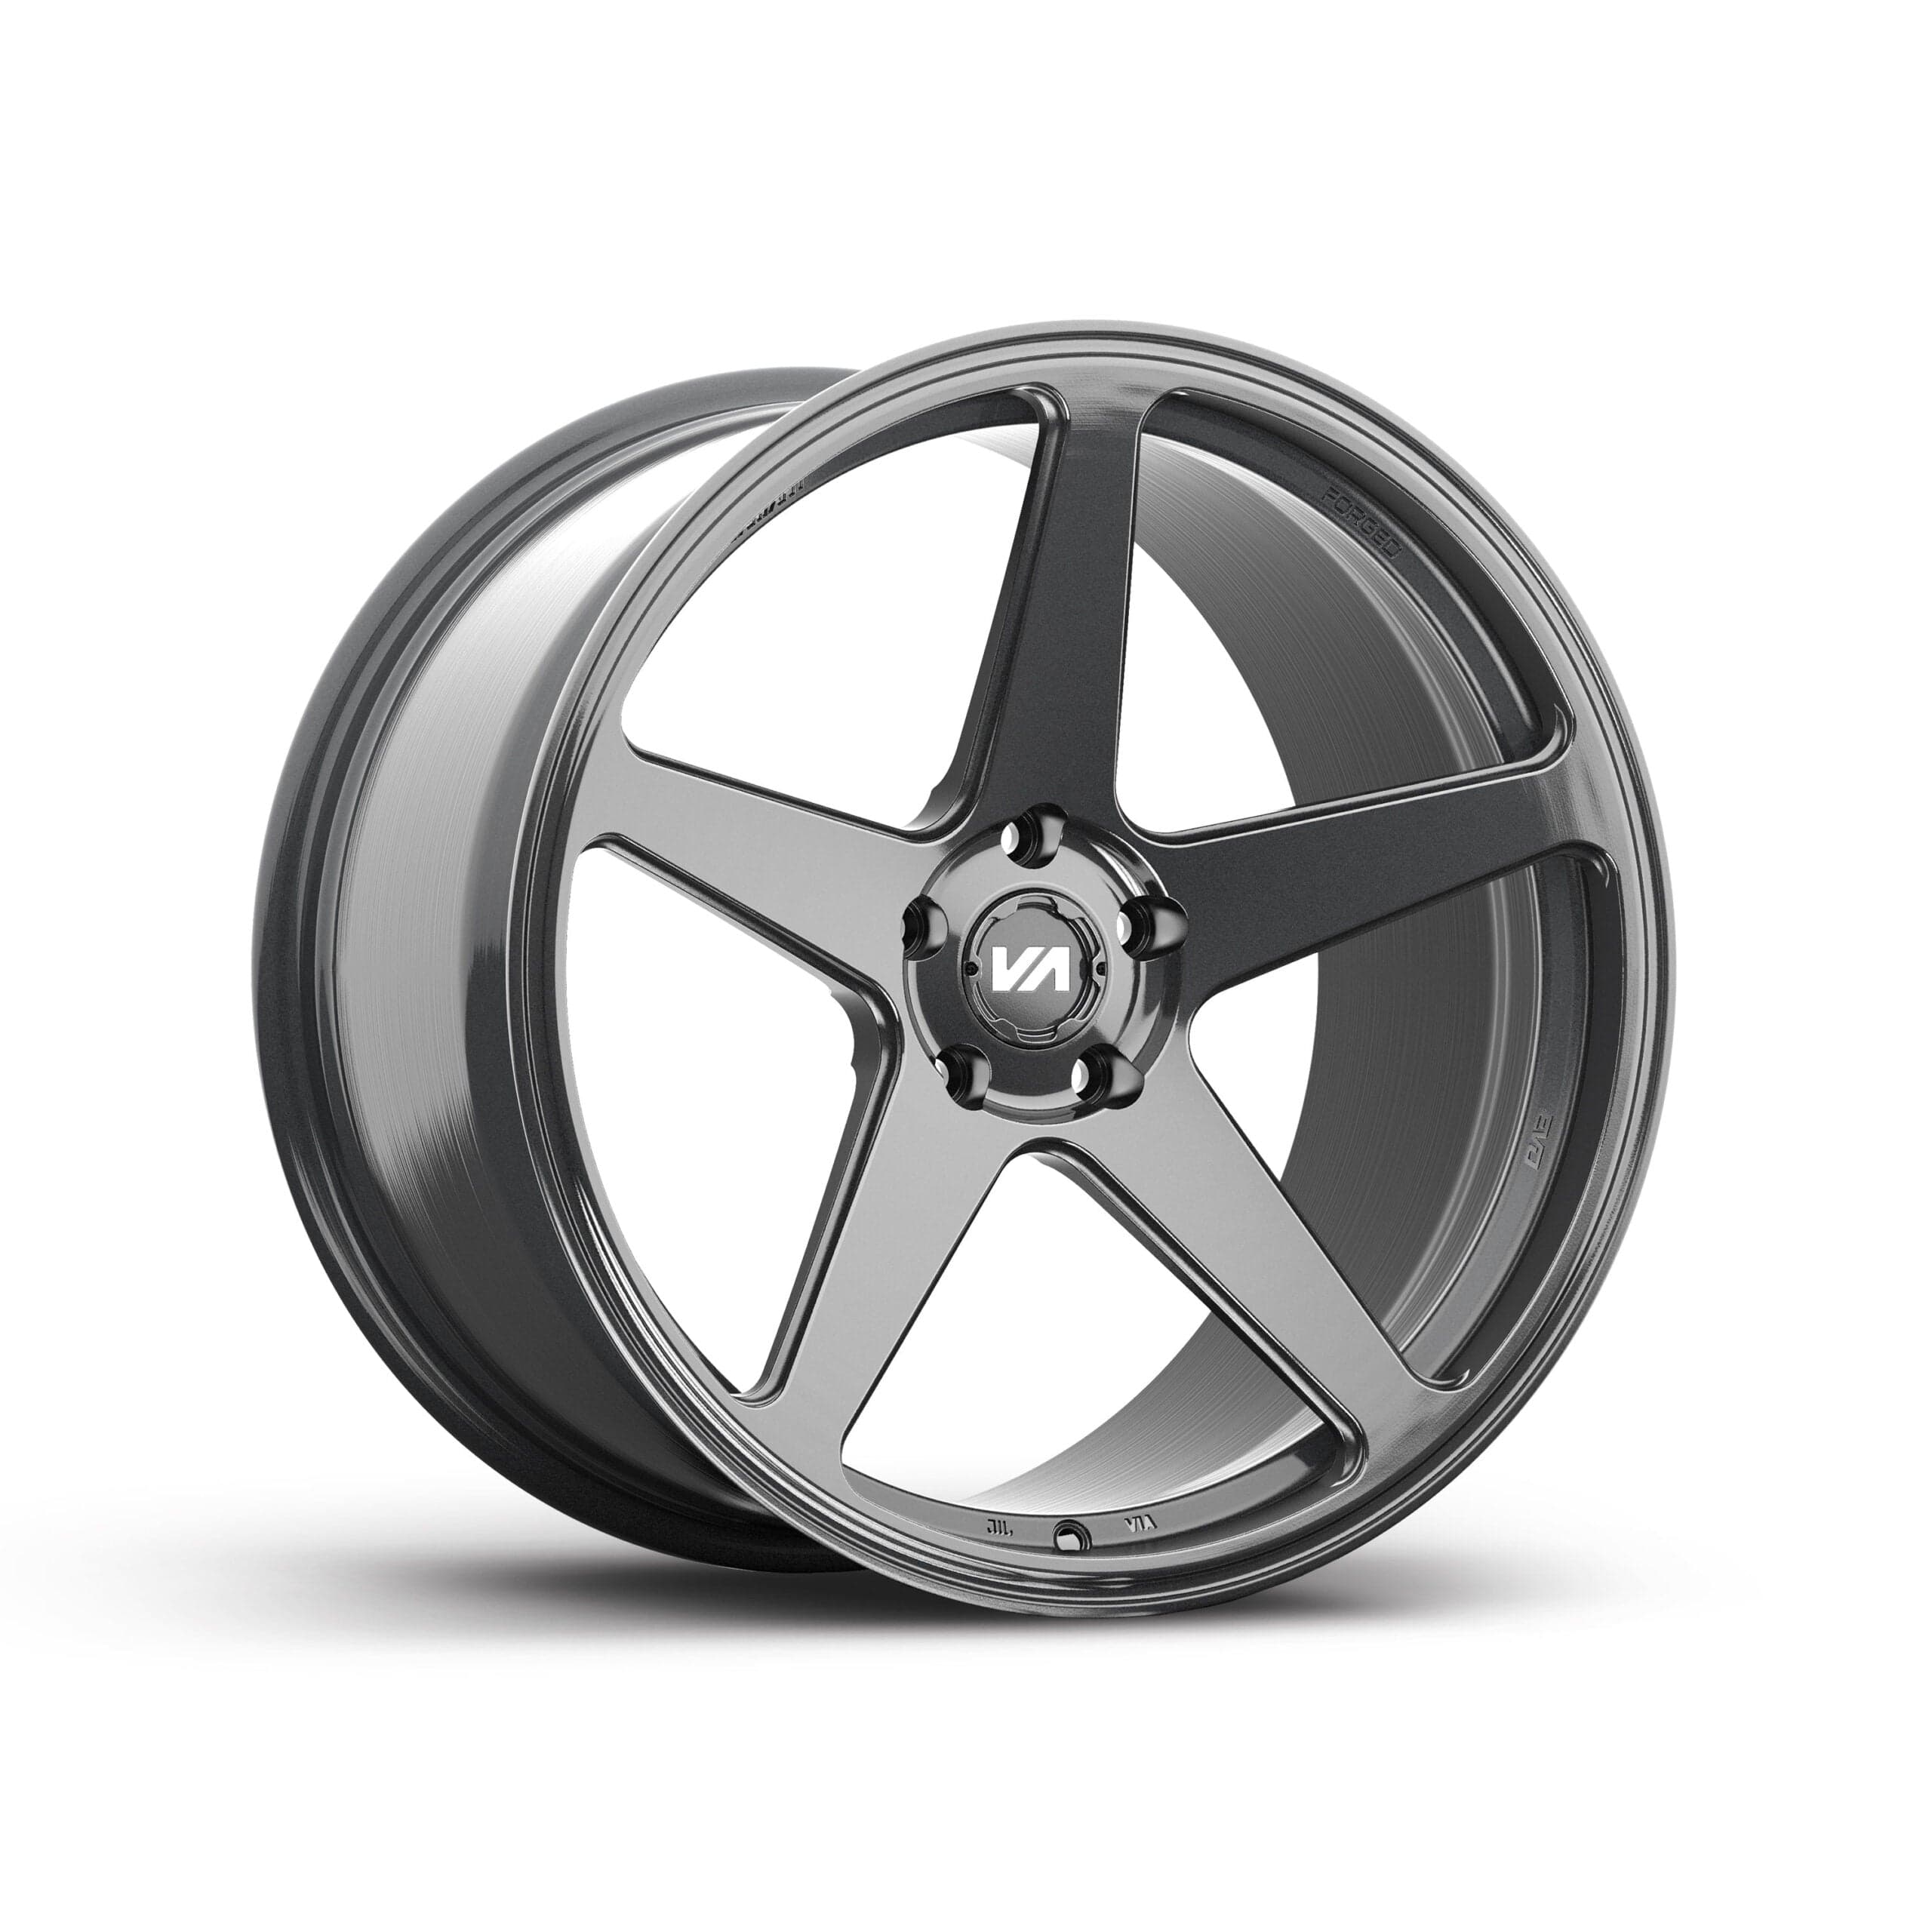 Kies-Motorsports Variant Variant™ Sena Collection Alloy Wheels 19X8.5